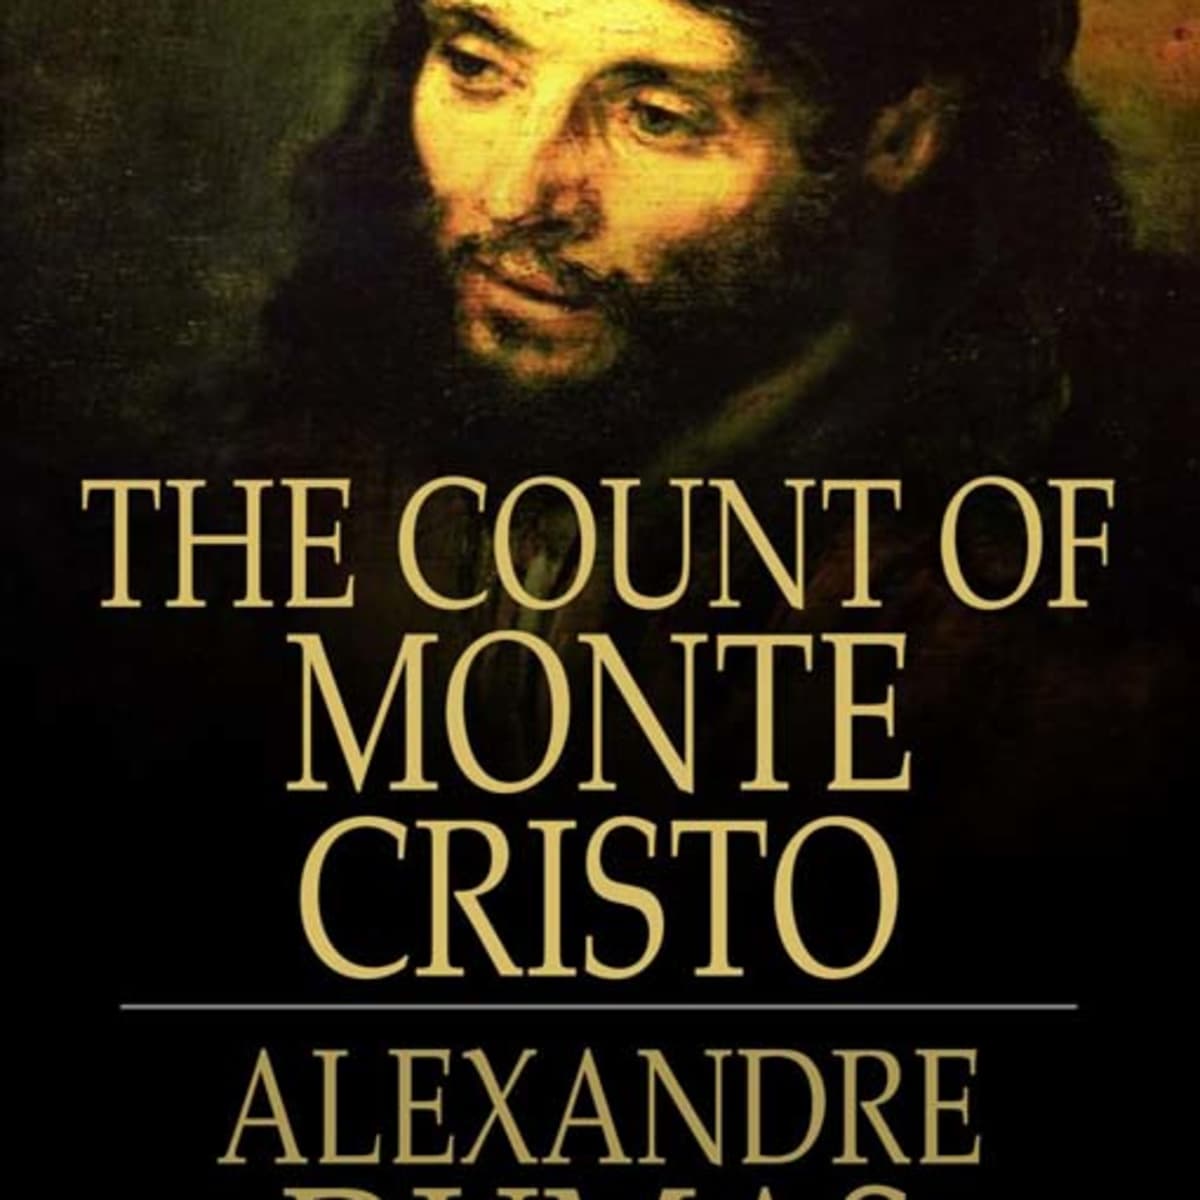 Count of monte cristo essay help